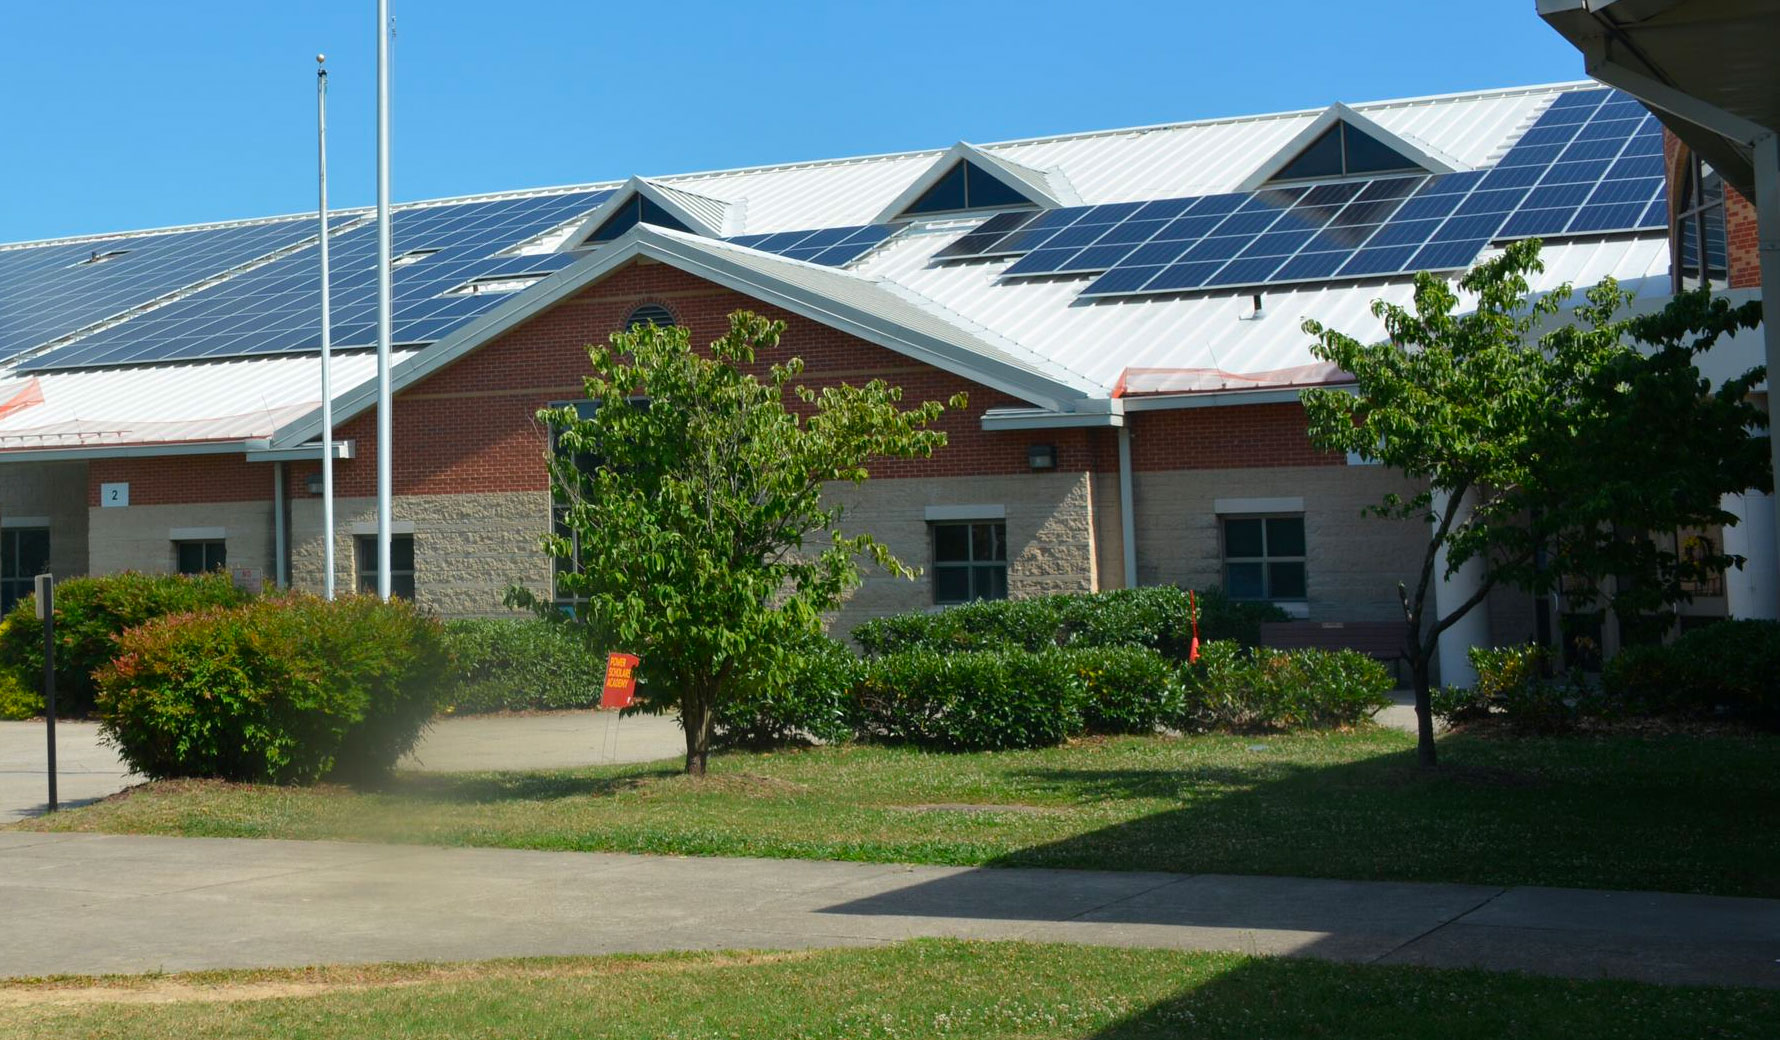 Richmond Public School Roof Solar Array